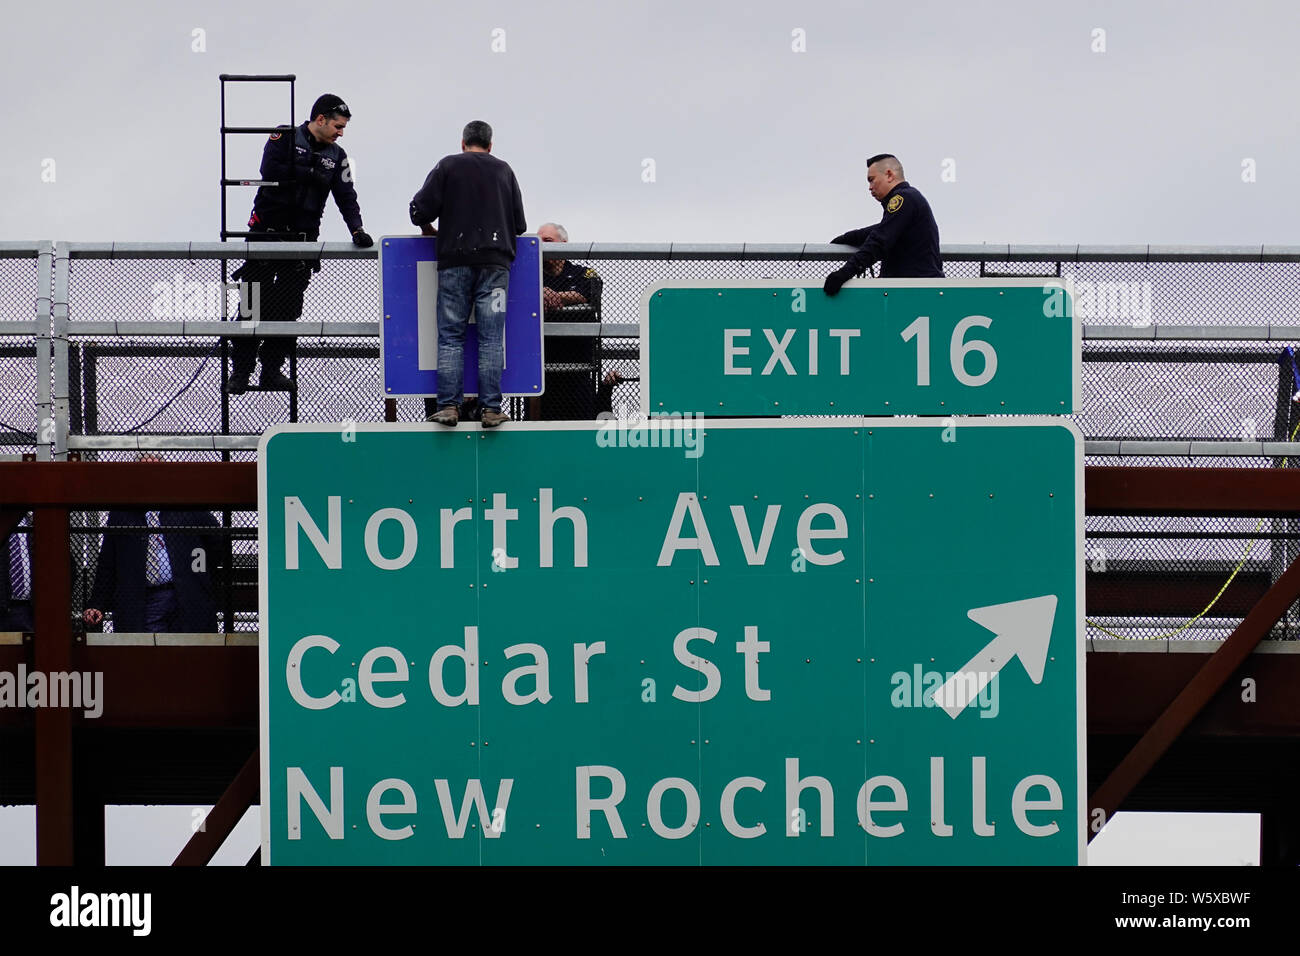 suicide jumper on bridge over interstate 95 in New Rochelle New York Stock Photo